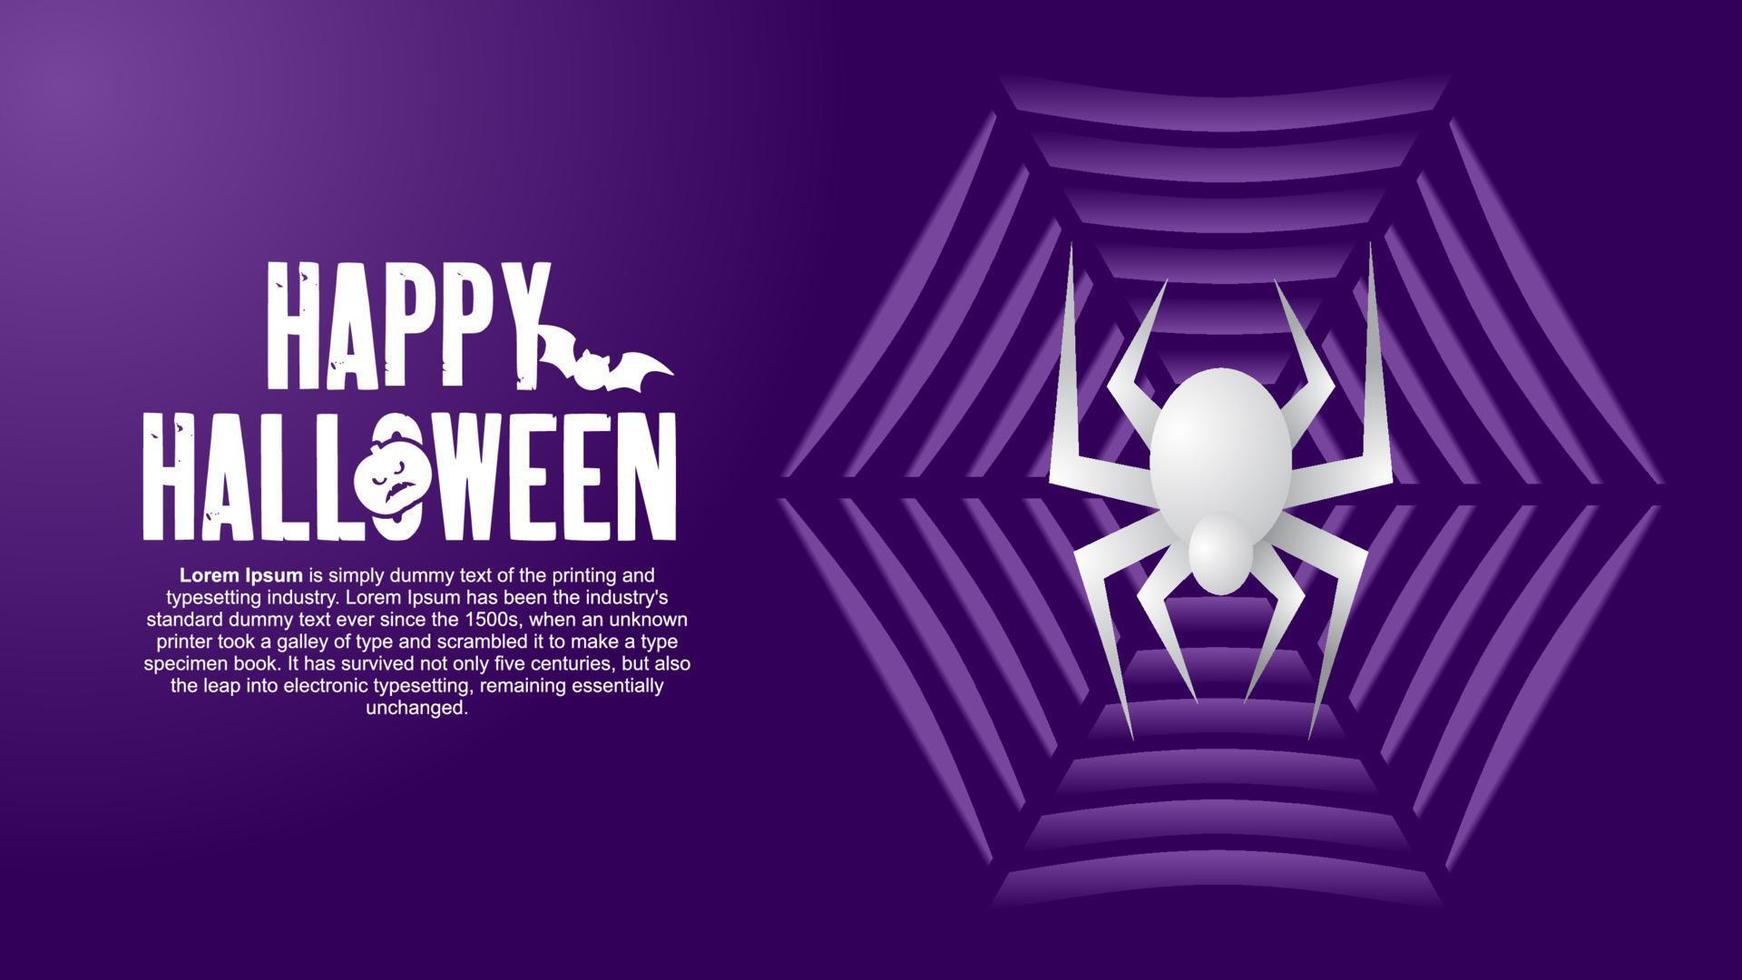 spinnenweb vlak ontwerp met eng Purper achtergrond vector